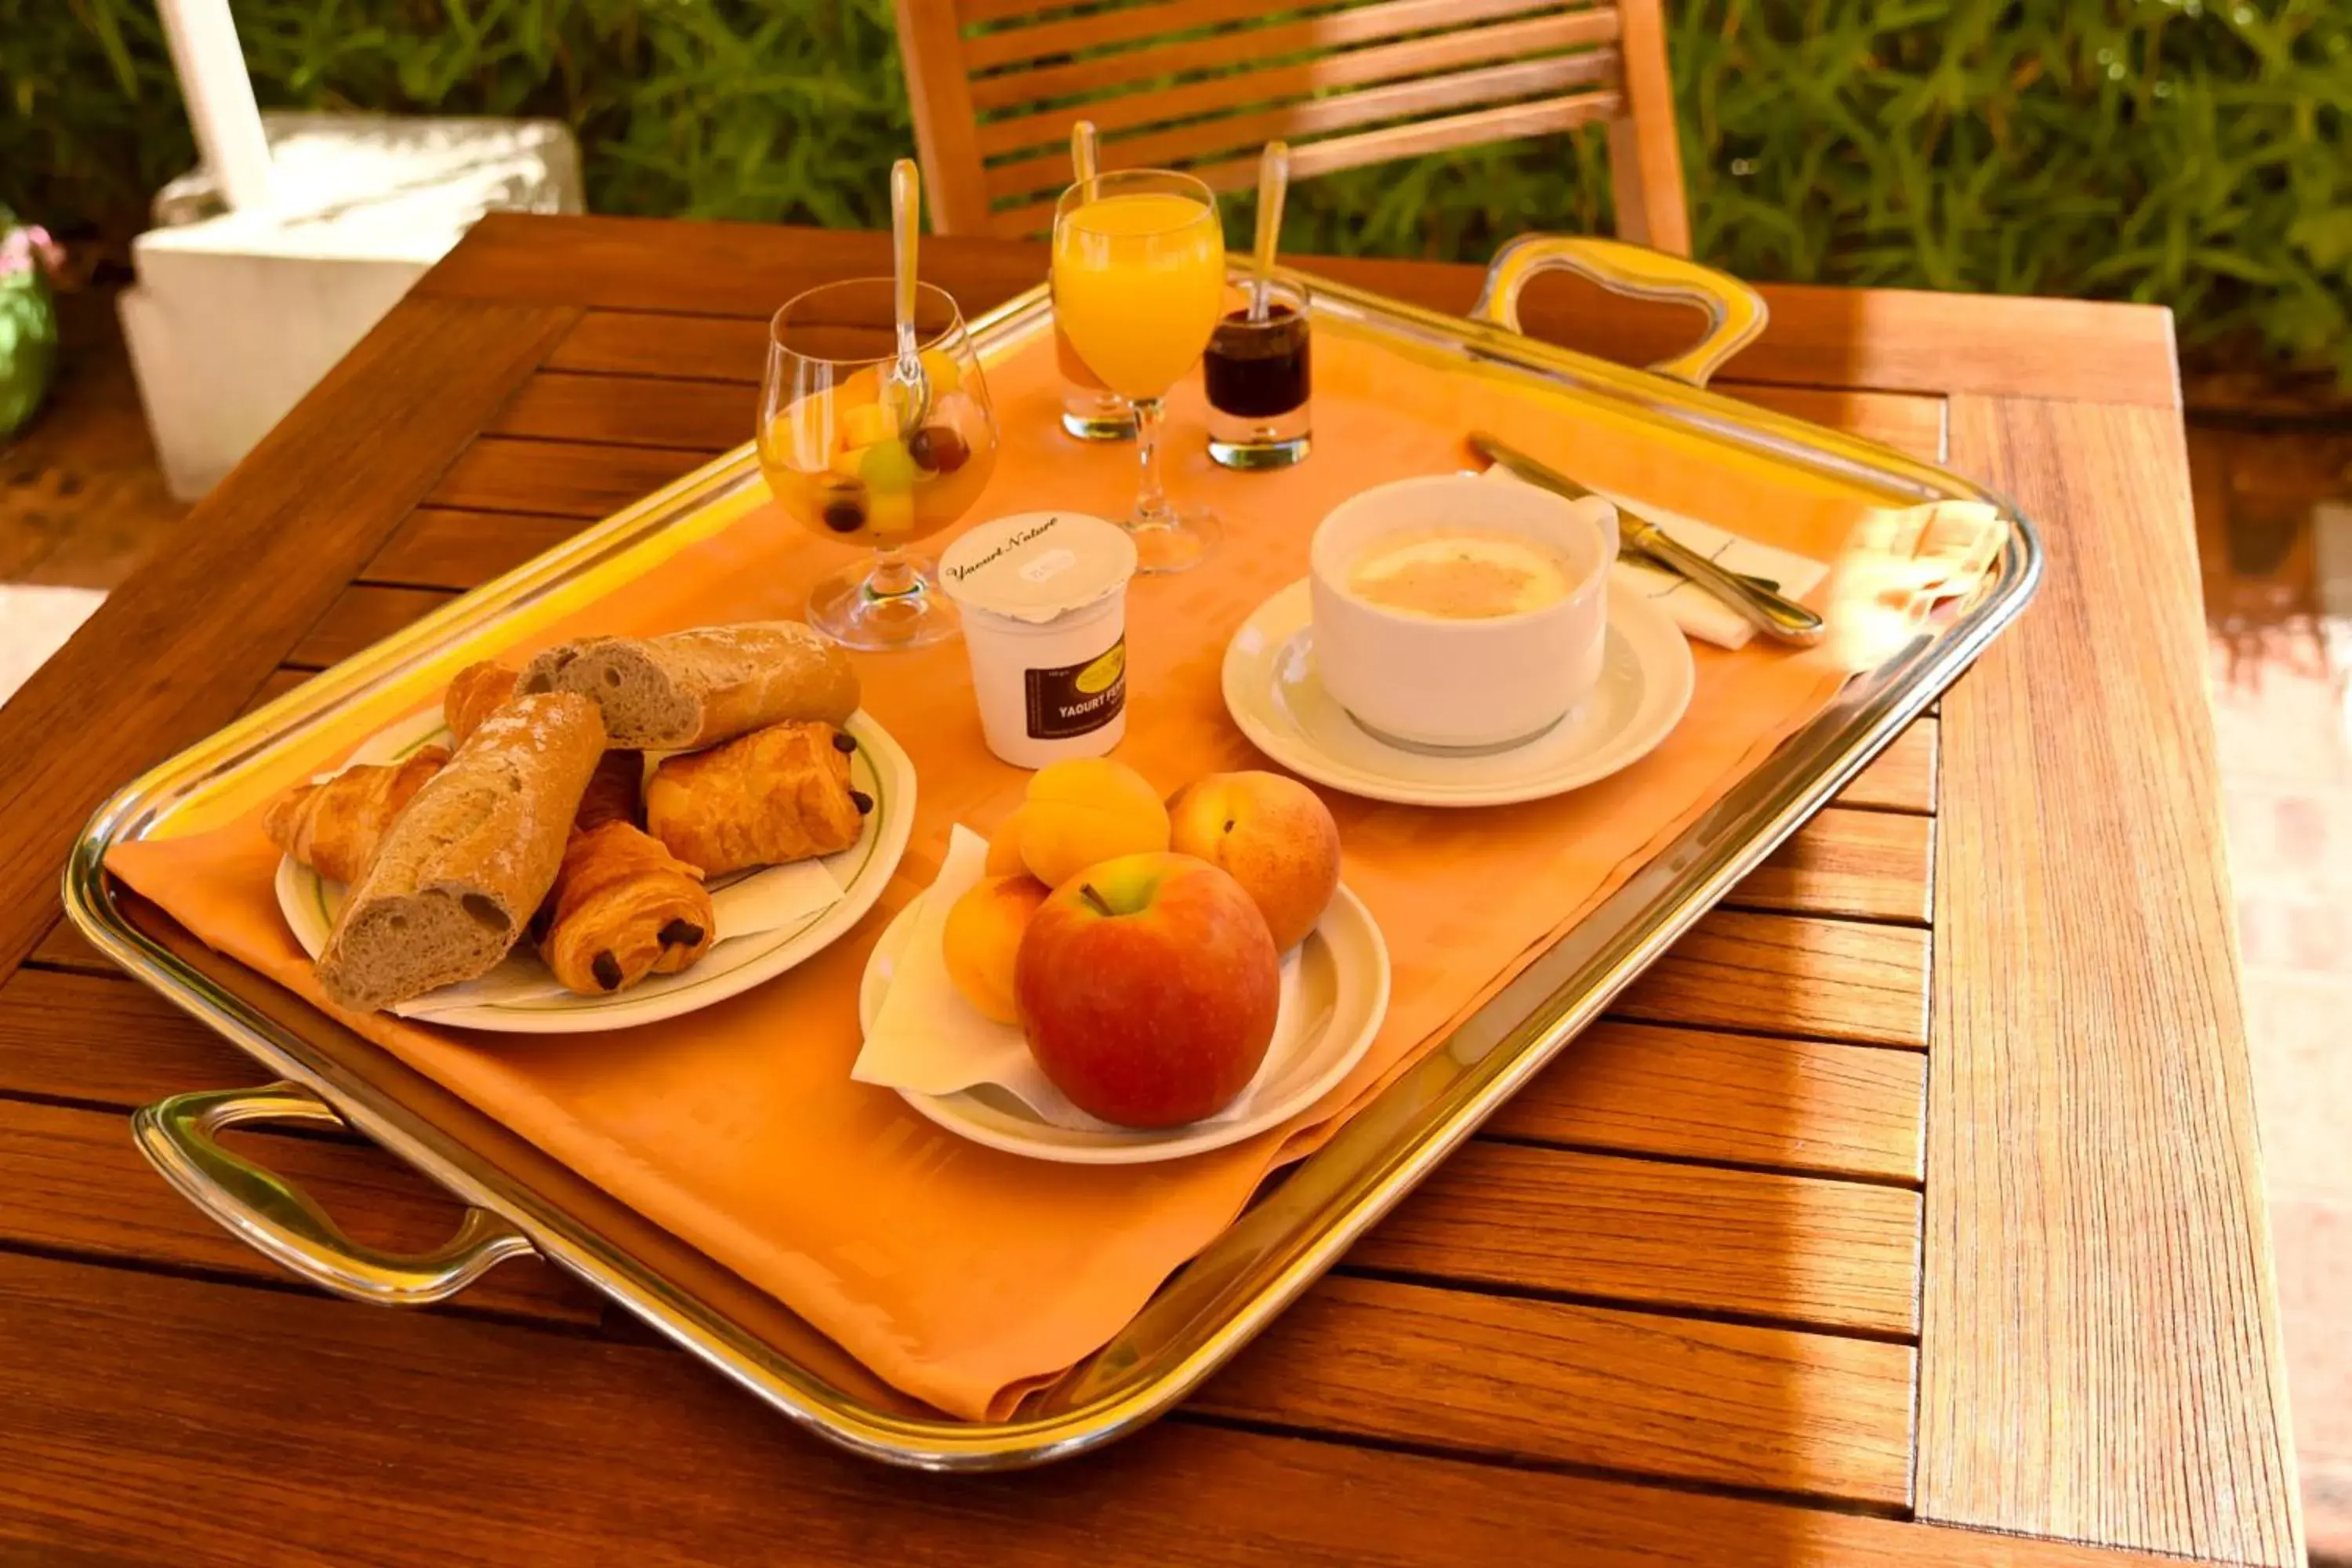 Breakfast in Hôtel Cositel, Coutances